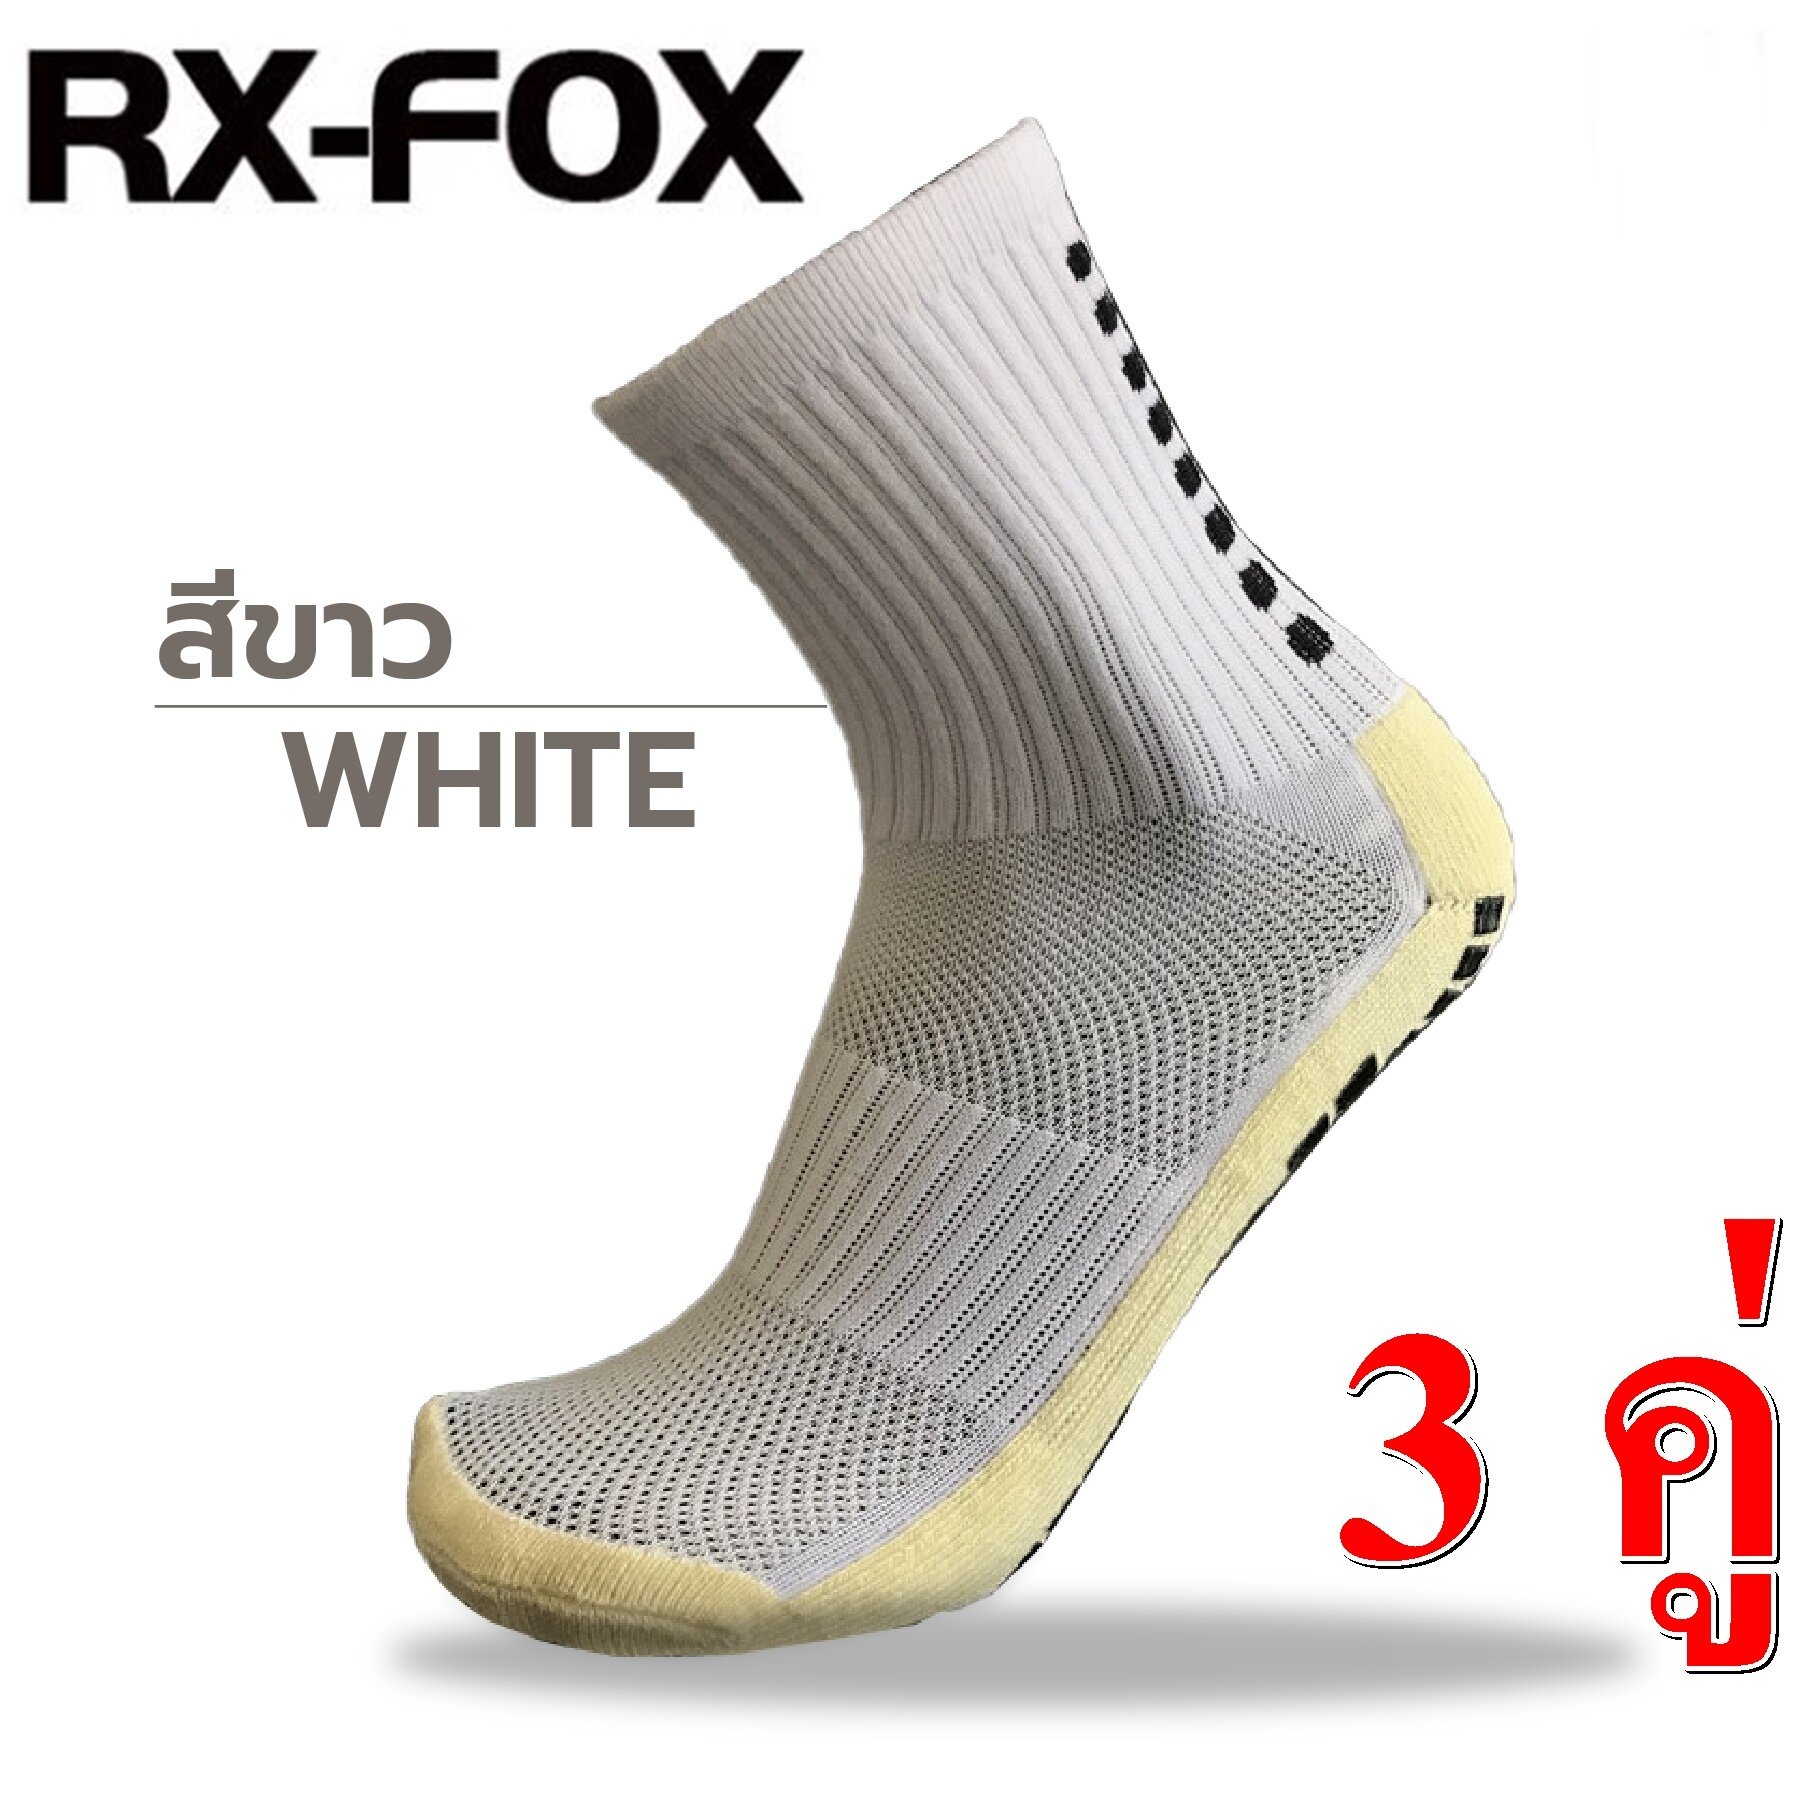 FOX socks ถุงเท้า ถุงเท้ากีฬา ถุงเท้ากันลื่น ถุงเท้าฟุตบอล ถุงเท้าวิ่ง ถุงเท้าข้อสั้น แบบสั้น แพ็คละ 3 คู่